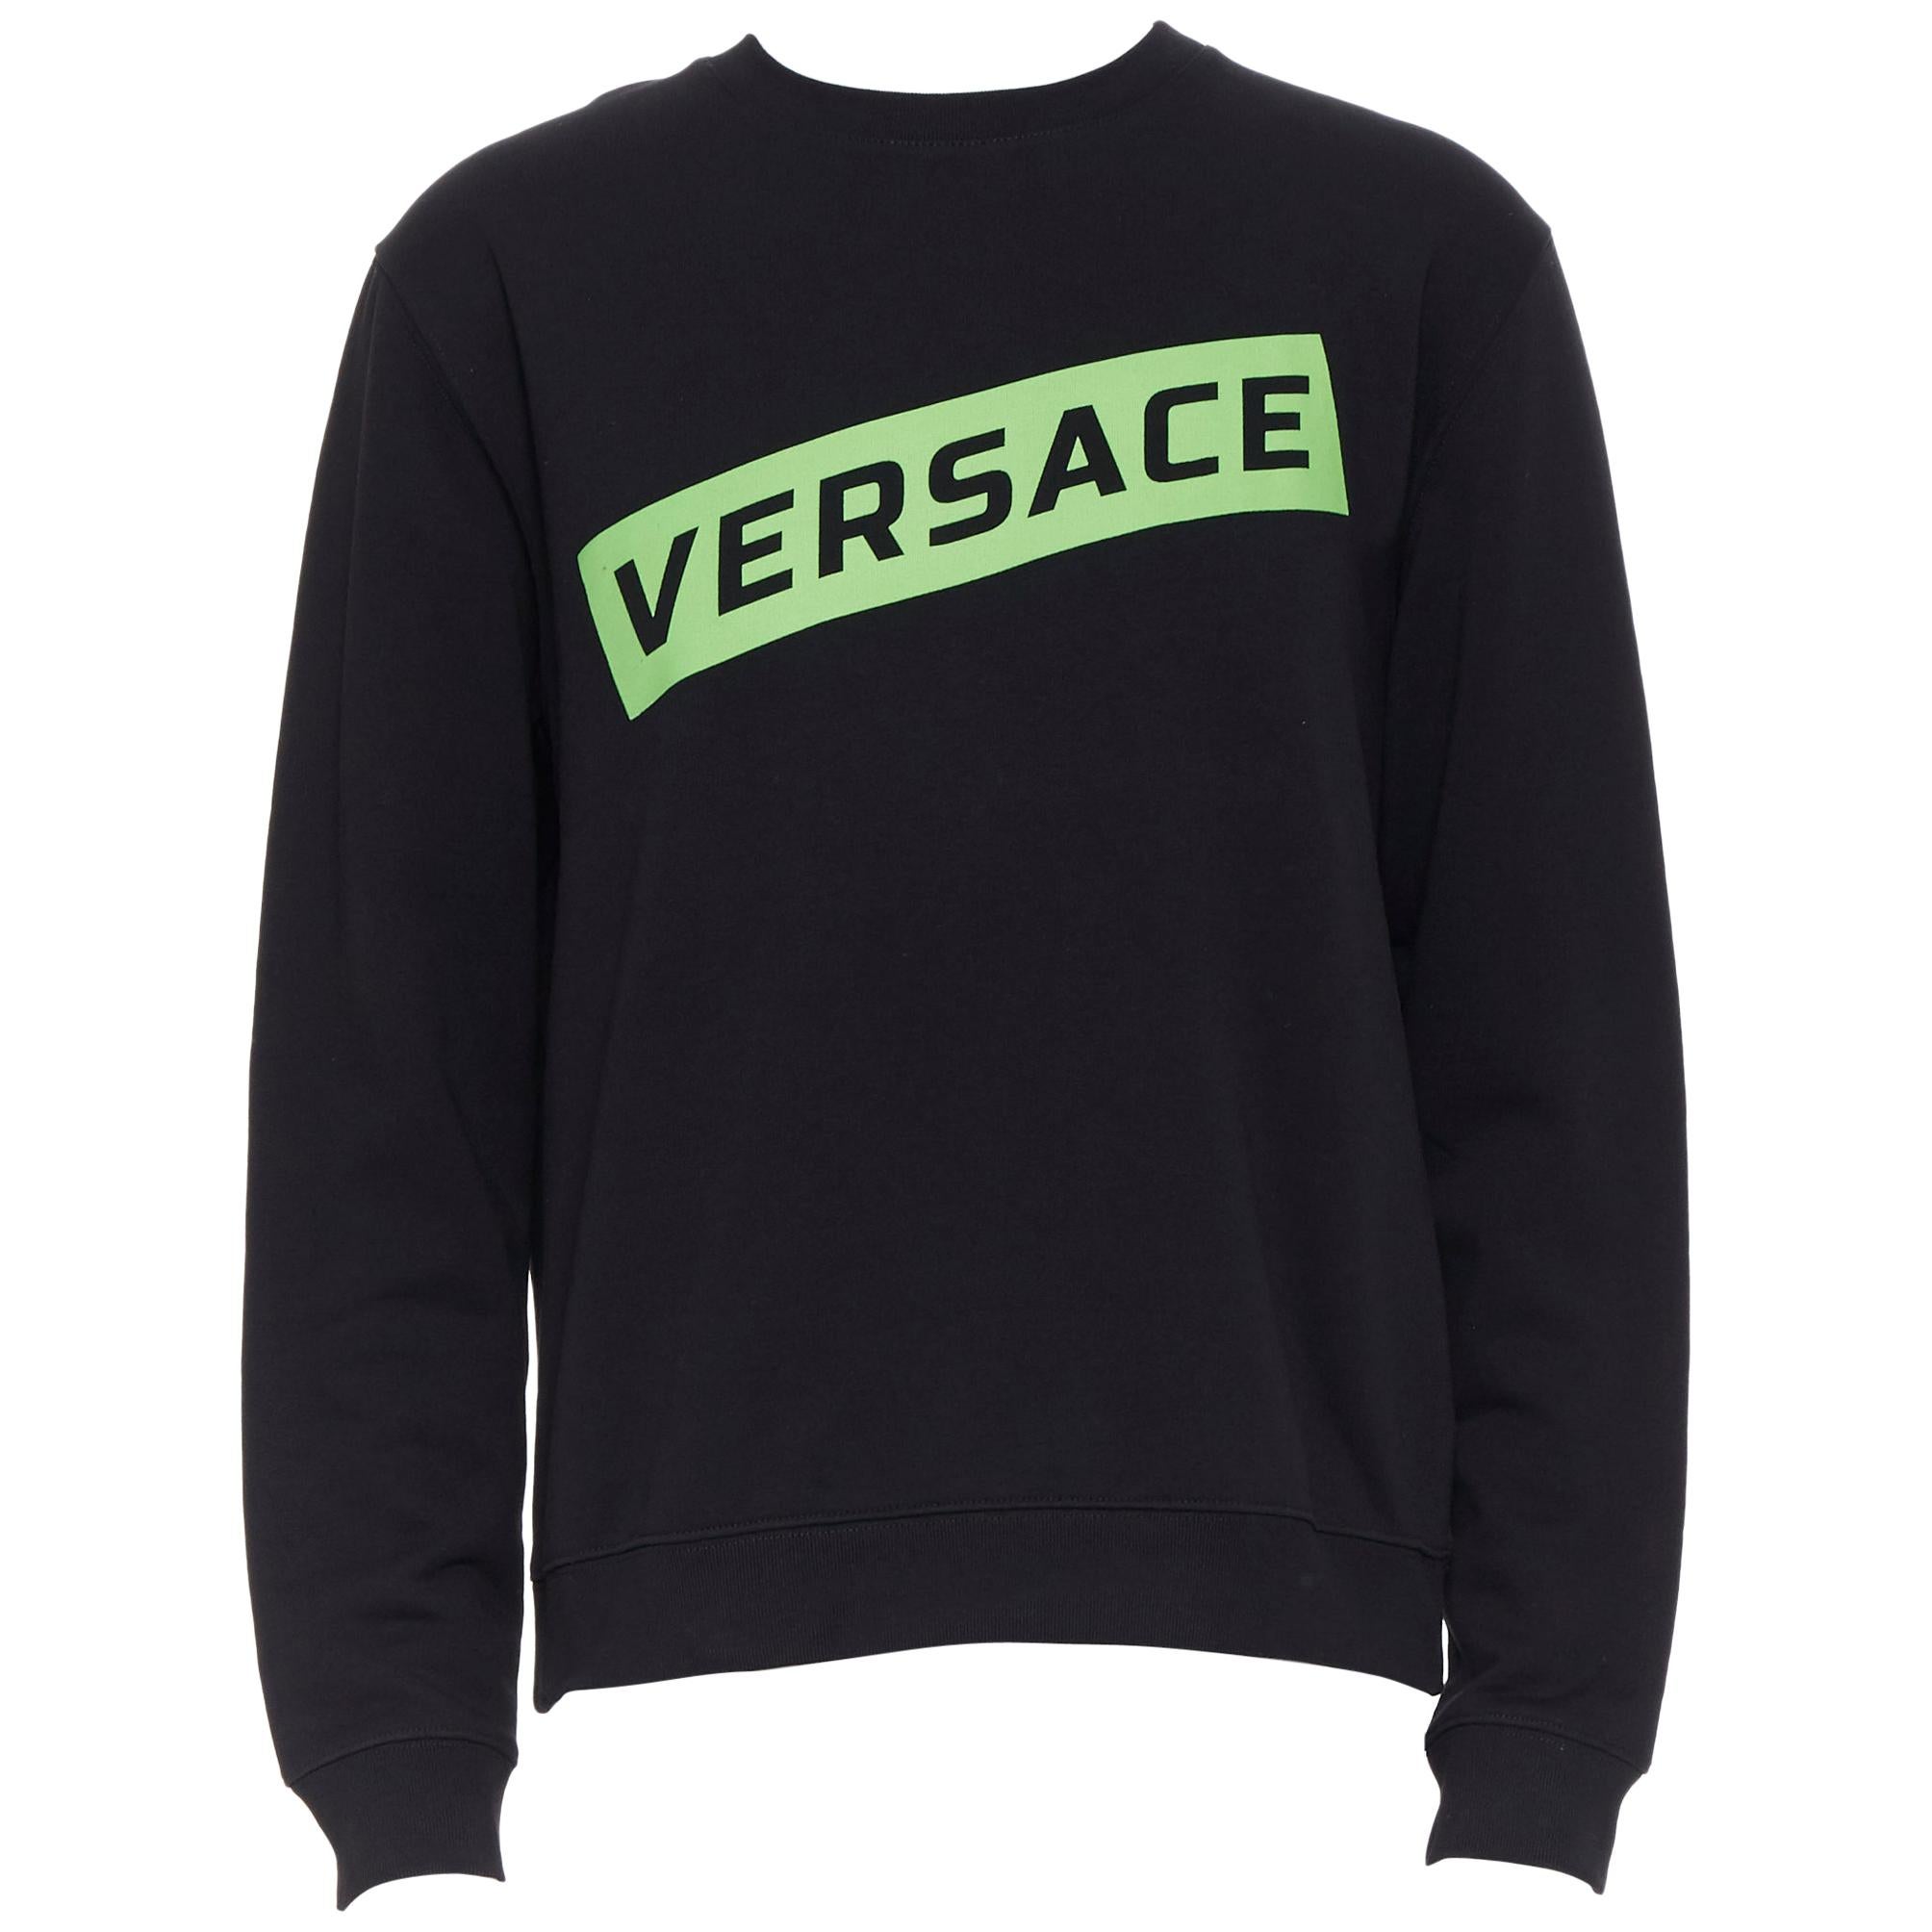 new VERSACE 2019 black cotton green box logo graphic crewneck pullover sweats L